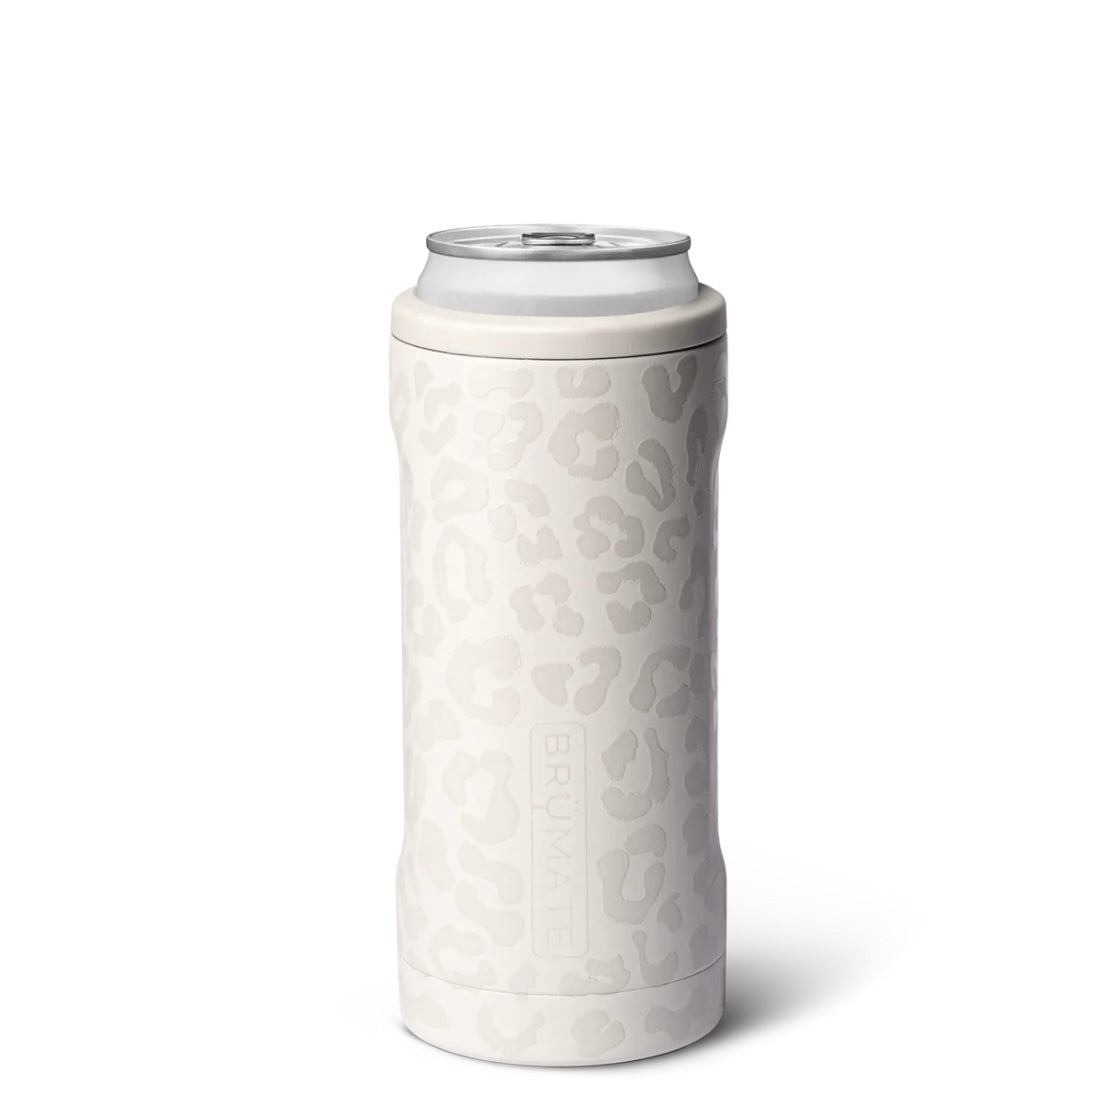 slim cans leak-proof drinkware hot to cold insulated drinkware tumbler like yeti brumate spillproof white cheetah leopard print